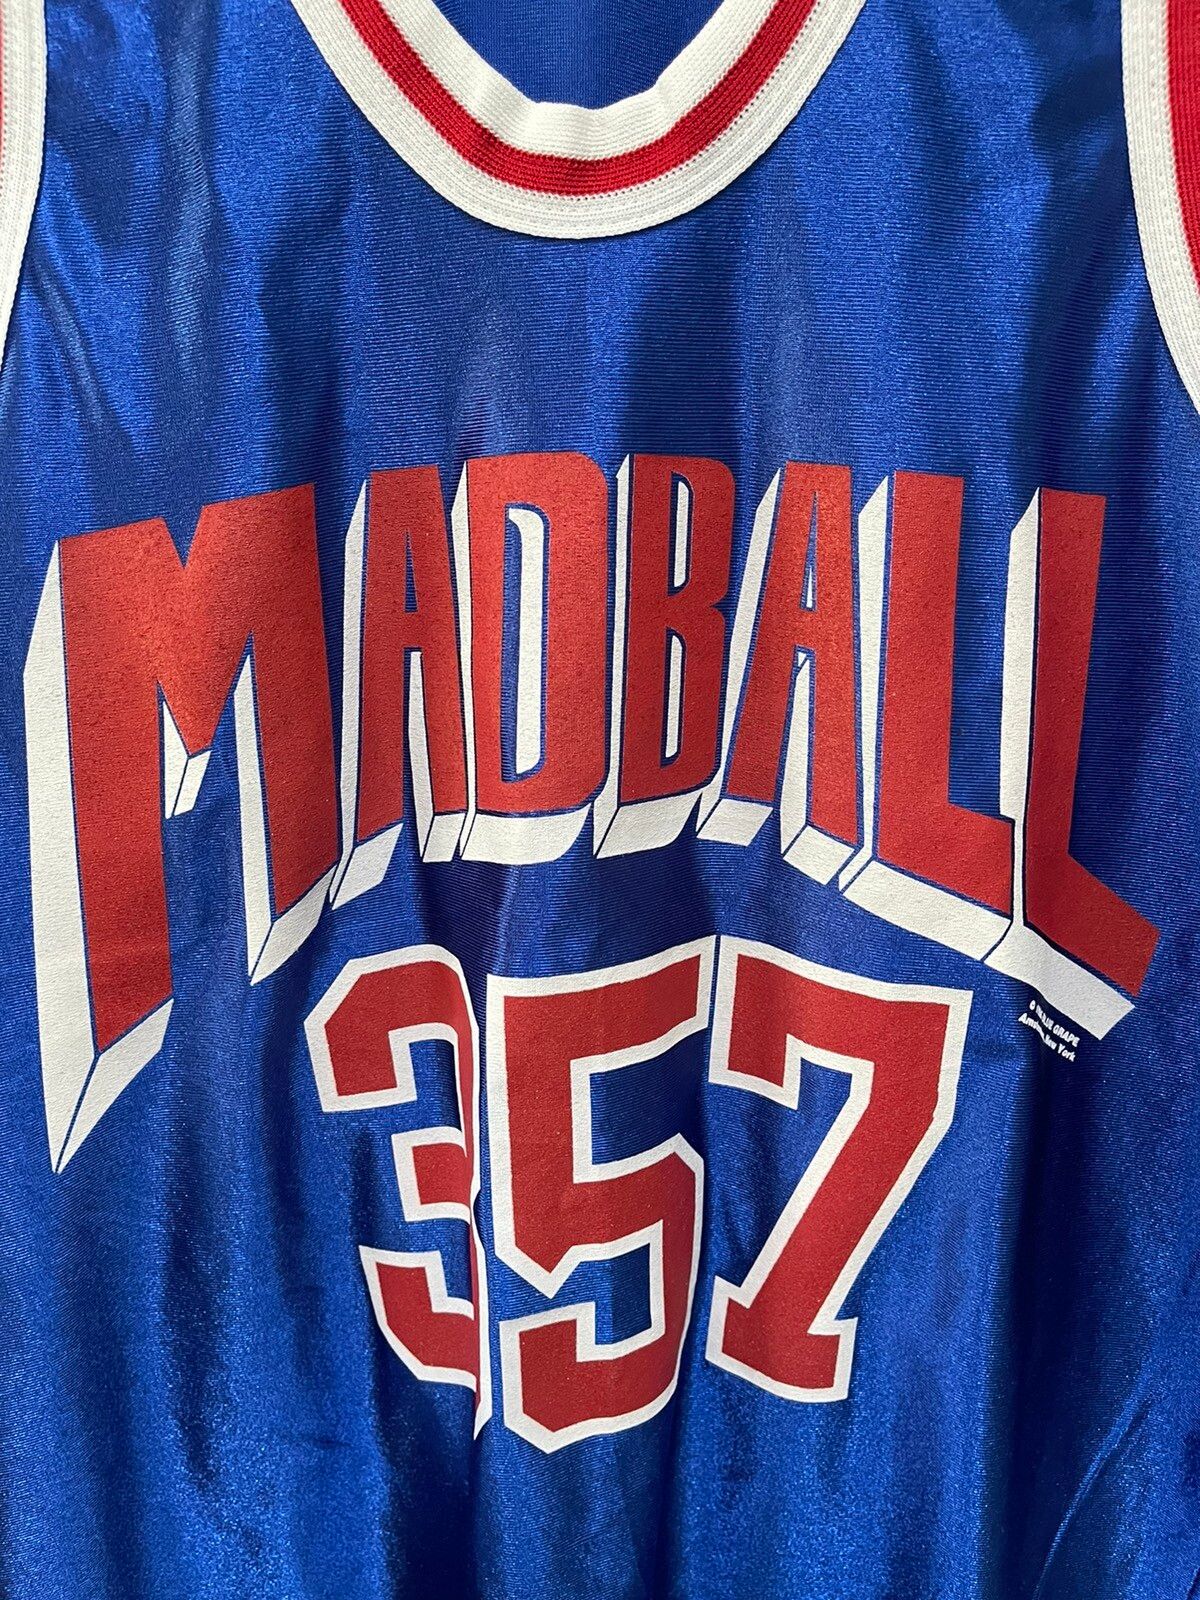 Vintage Madball 357 NYC basketball jersey - 6